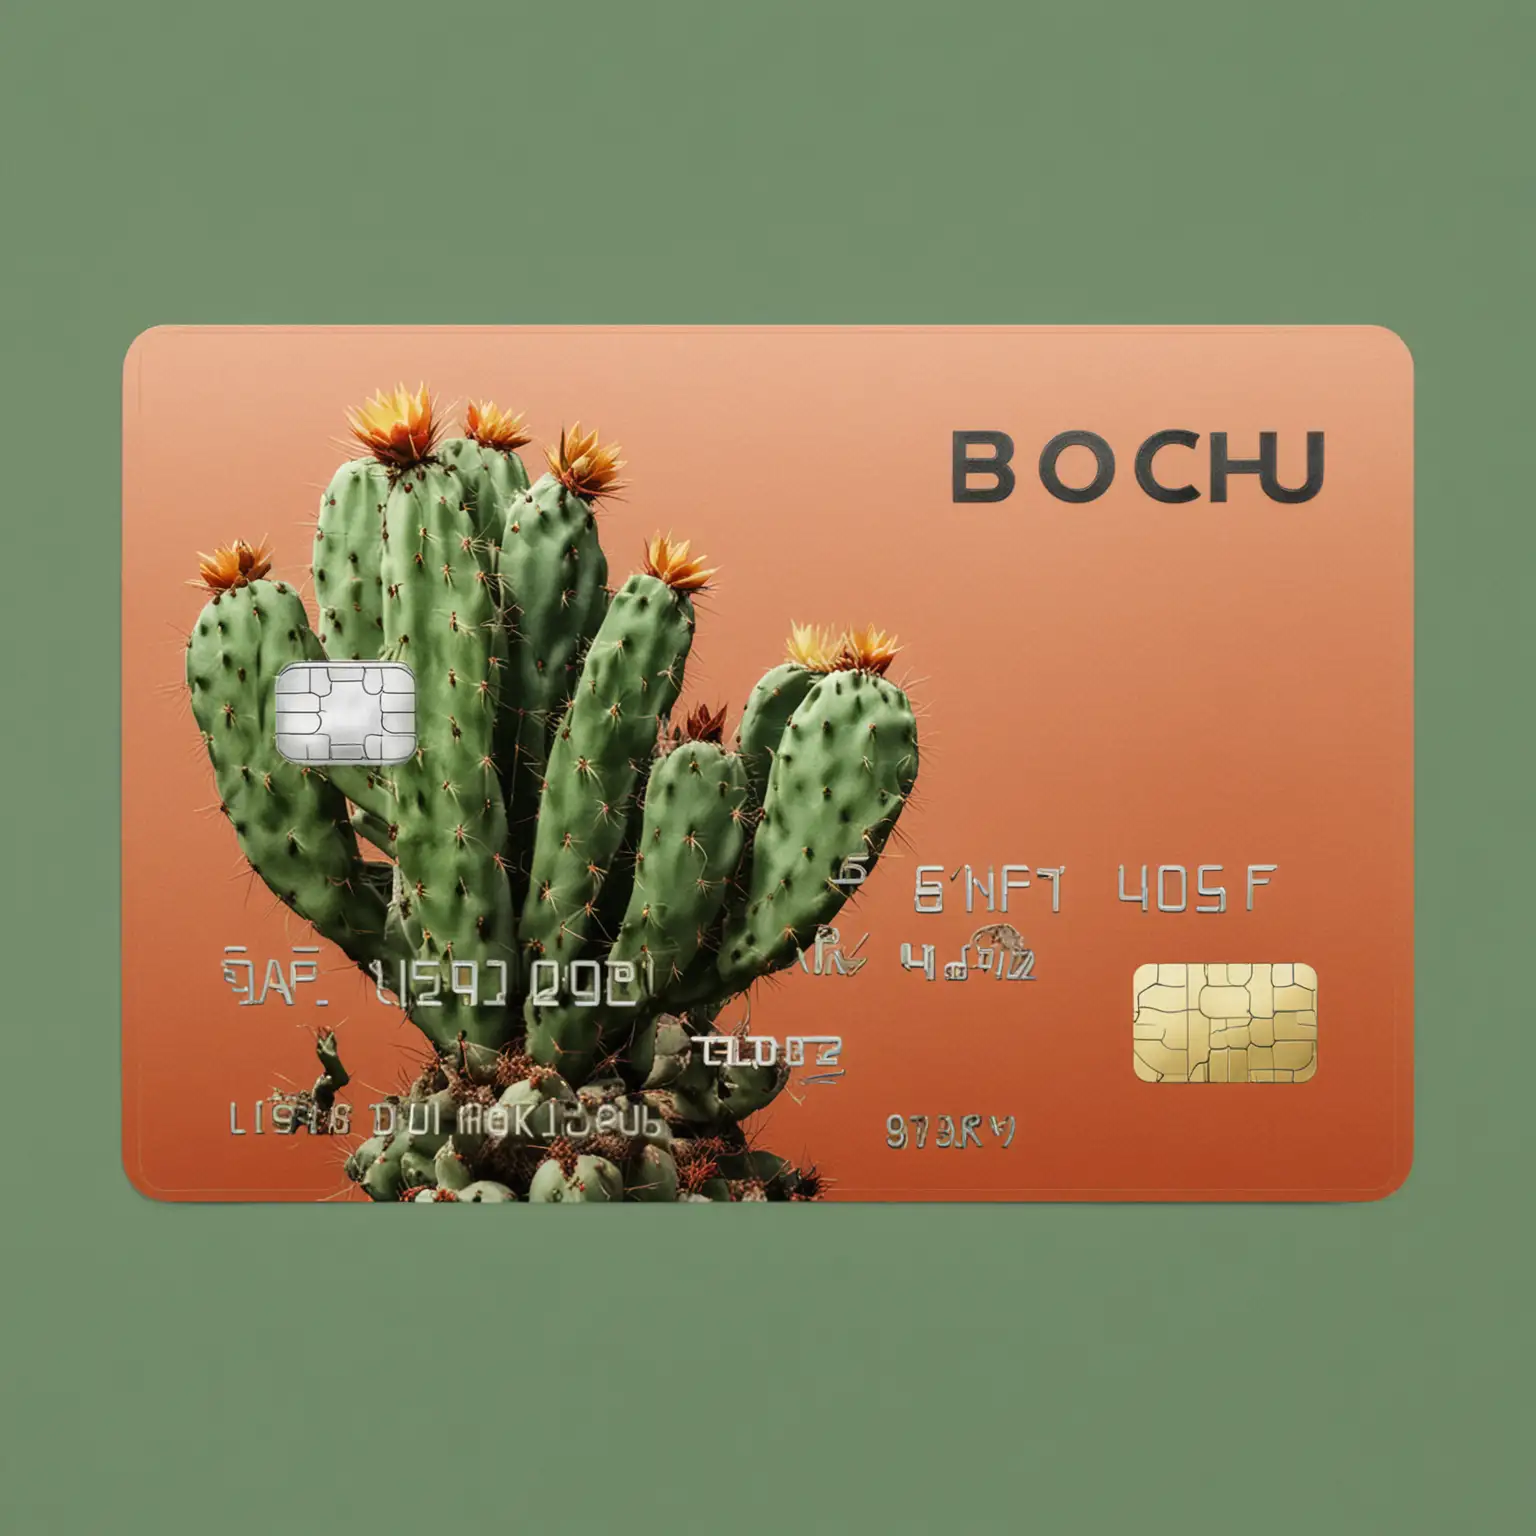 Digital Bank Card with Cactus Image and BOCHU NFT Code